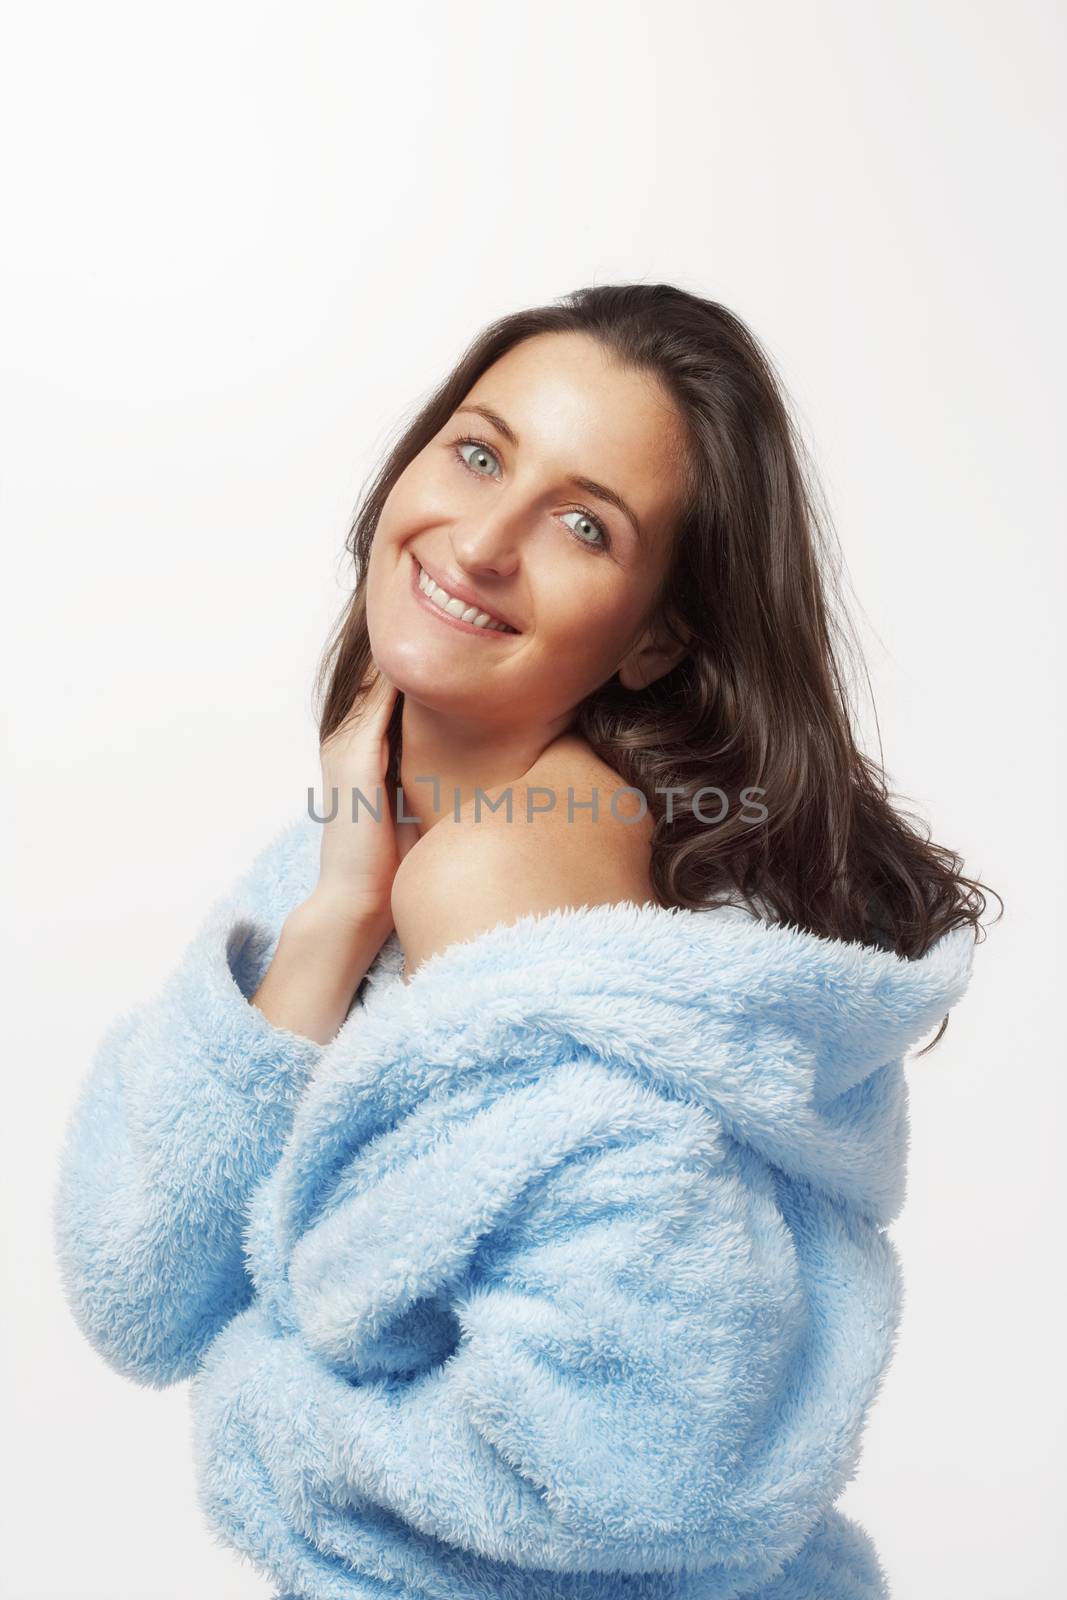 woman in bathrobe by courtyardpix